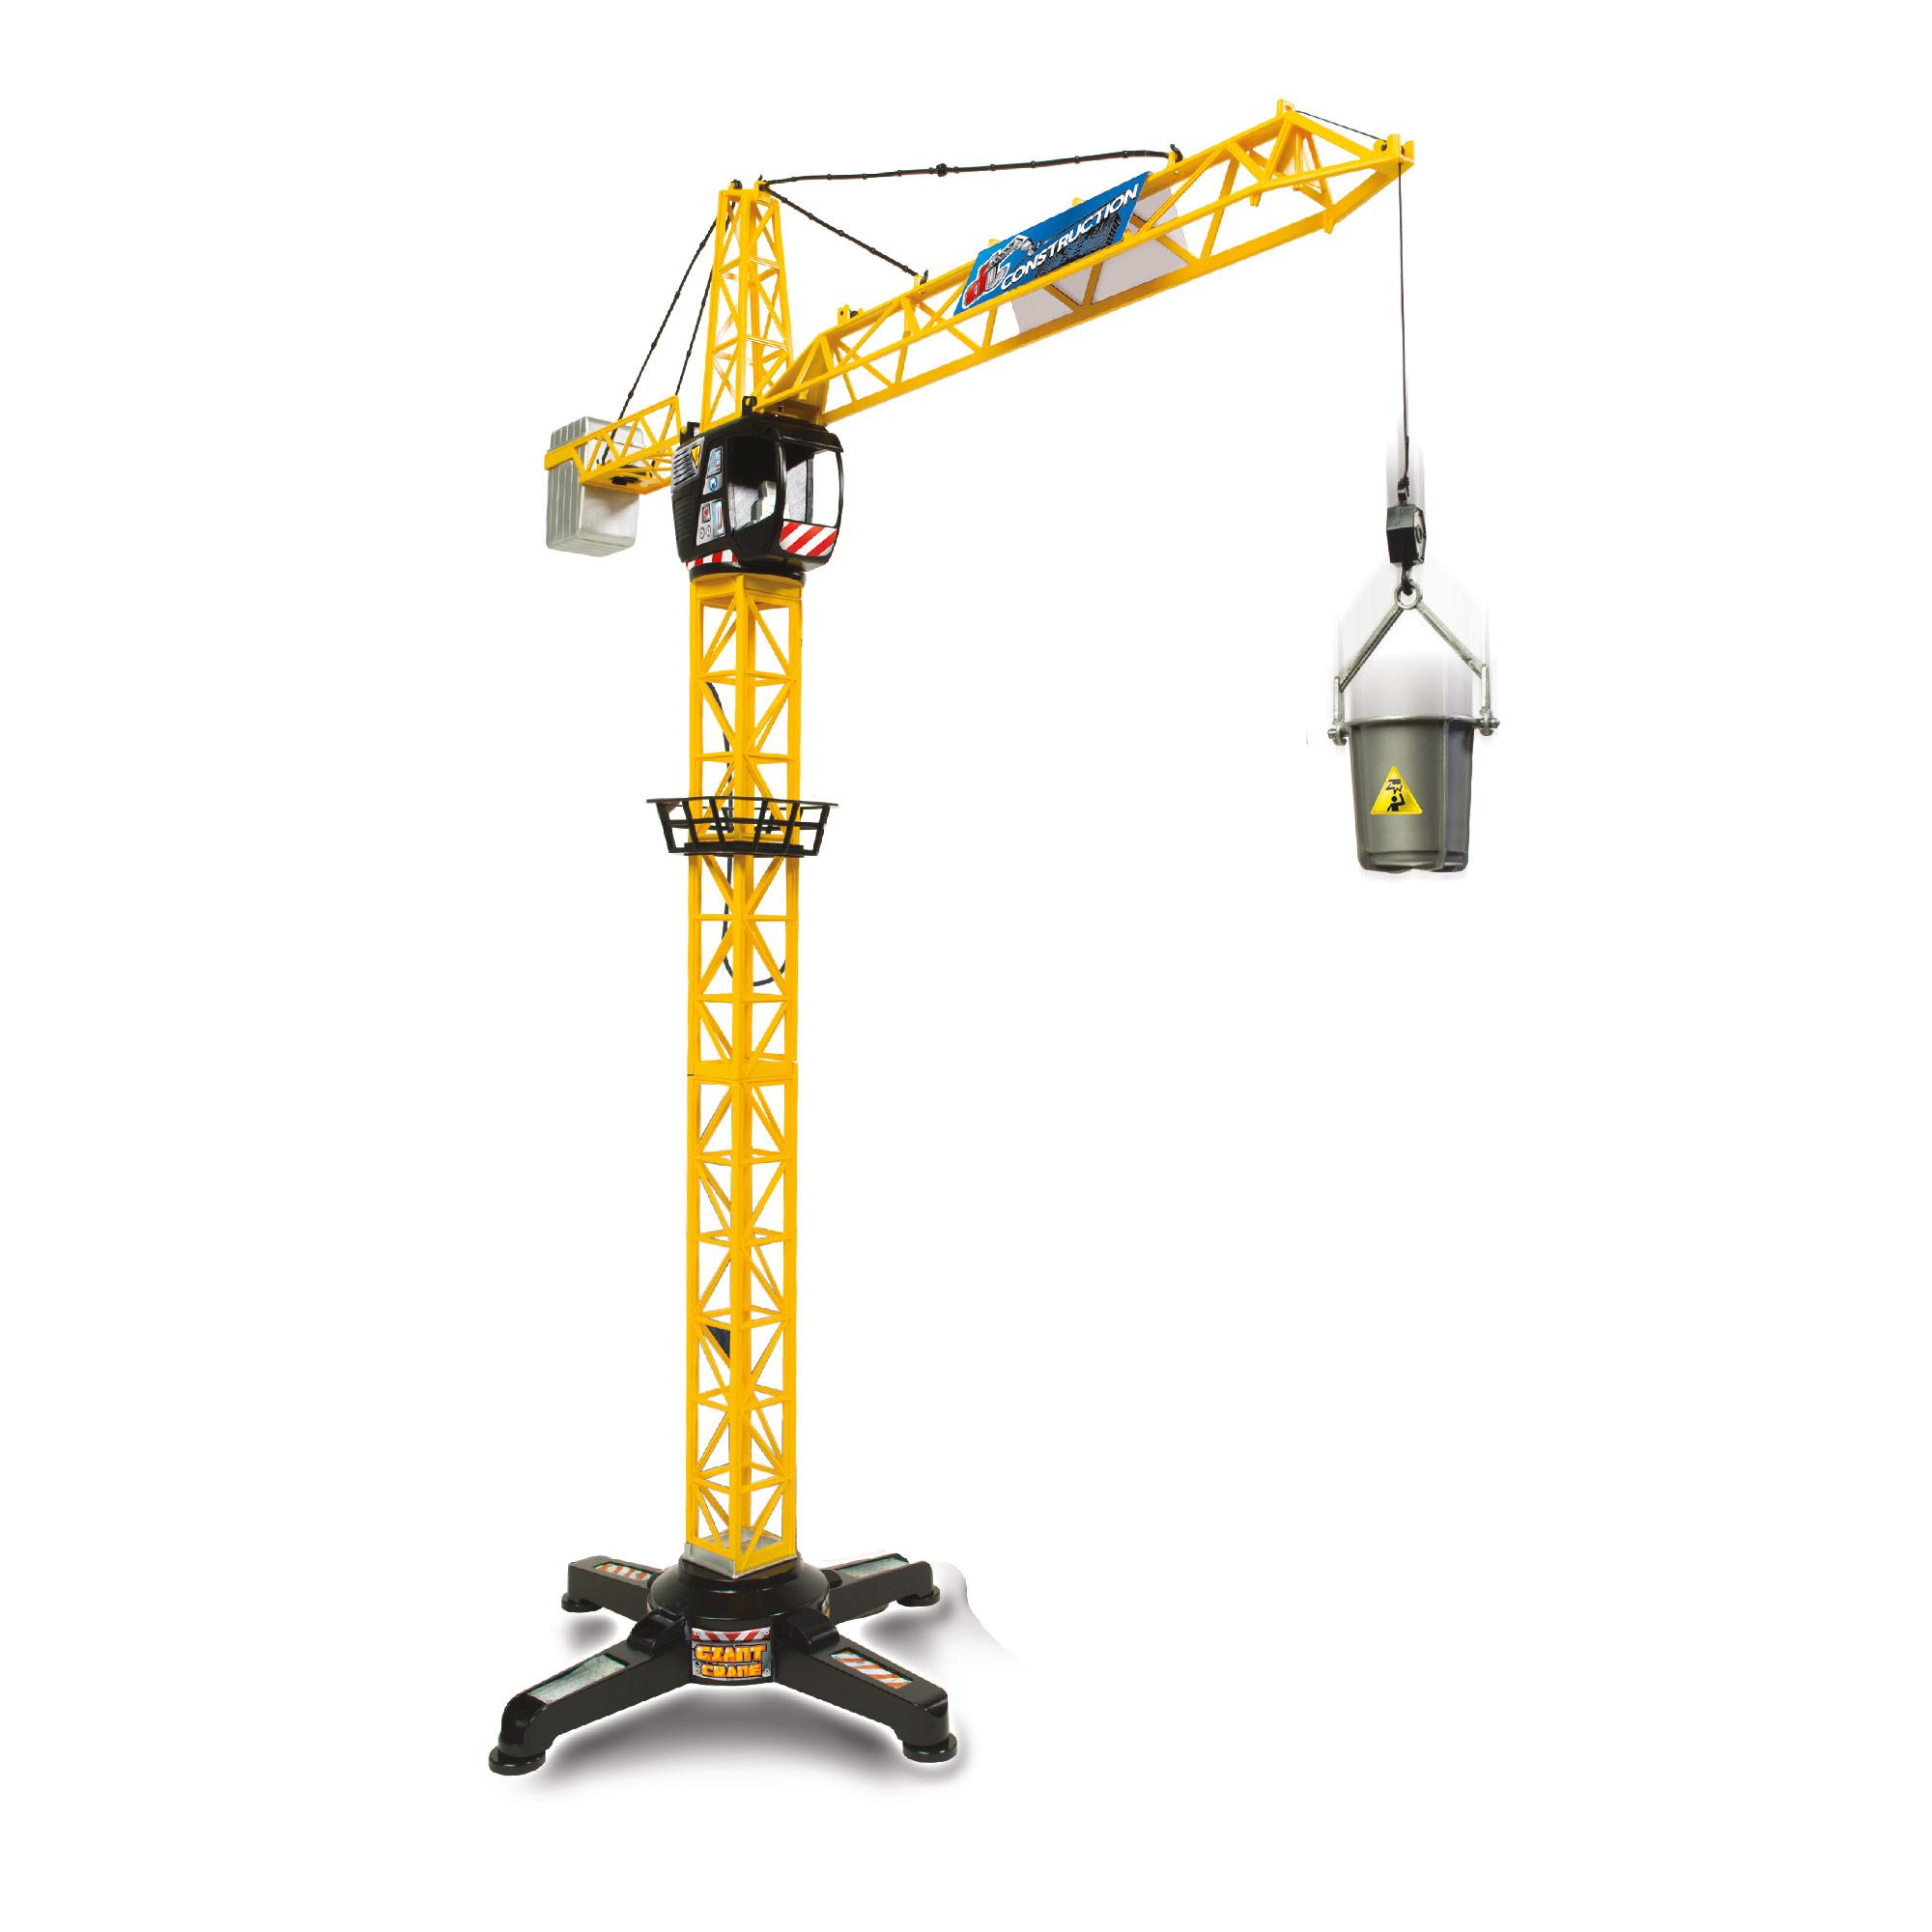 John World RC Construction Crane - £32.00 - Hamleys for Toys and Games